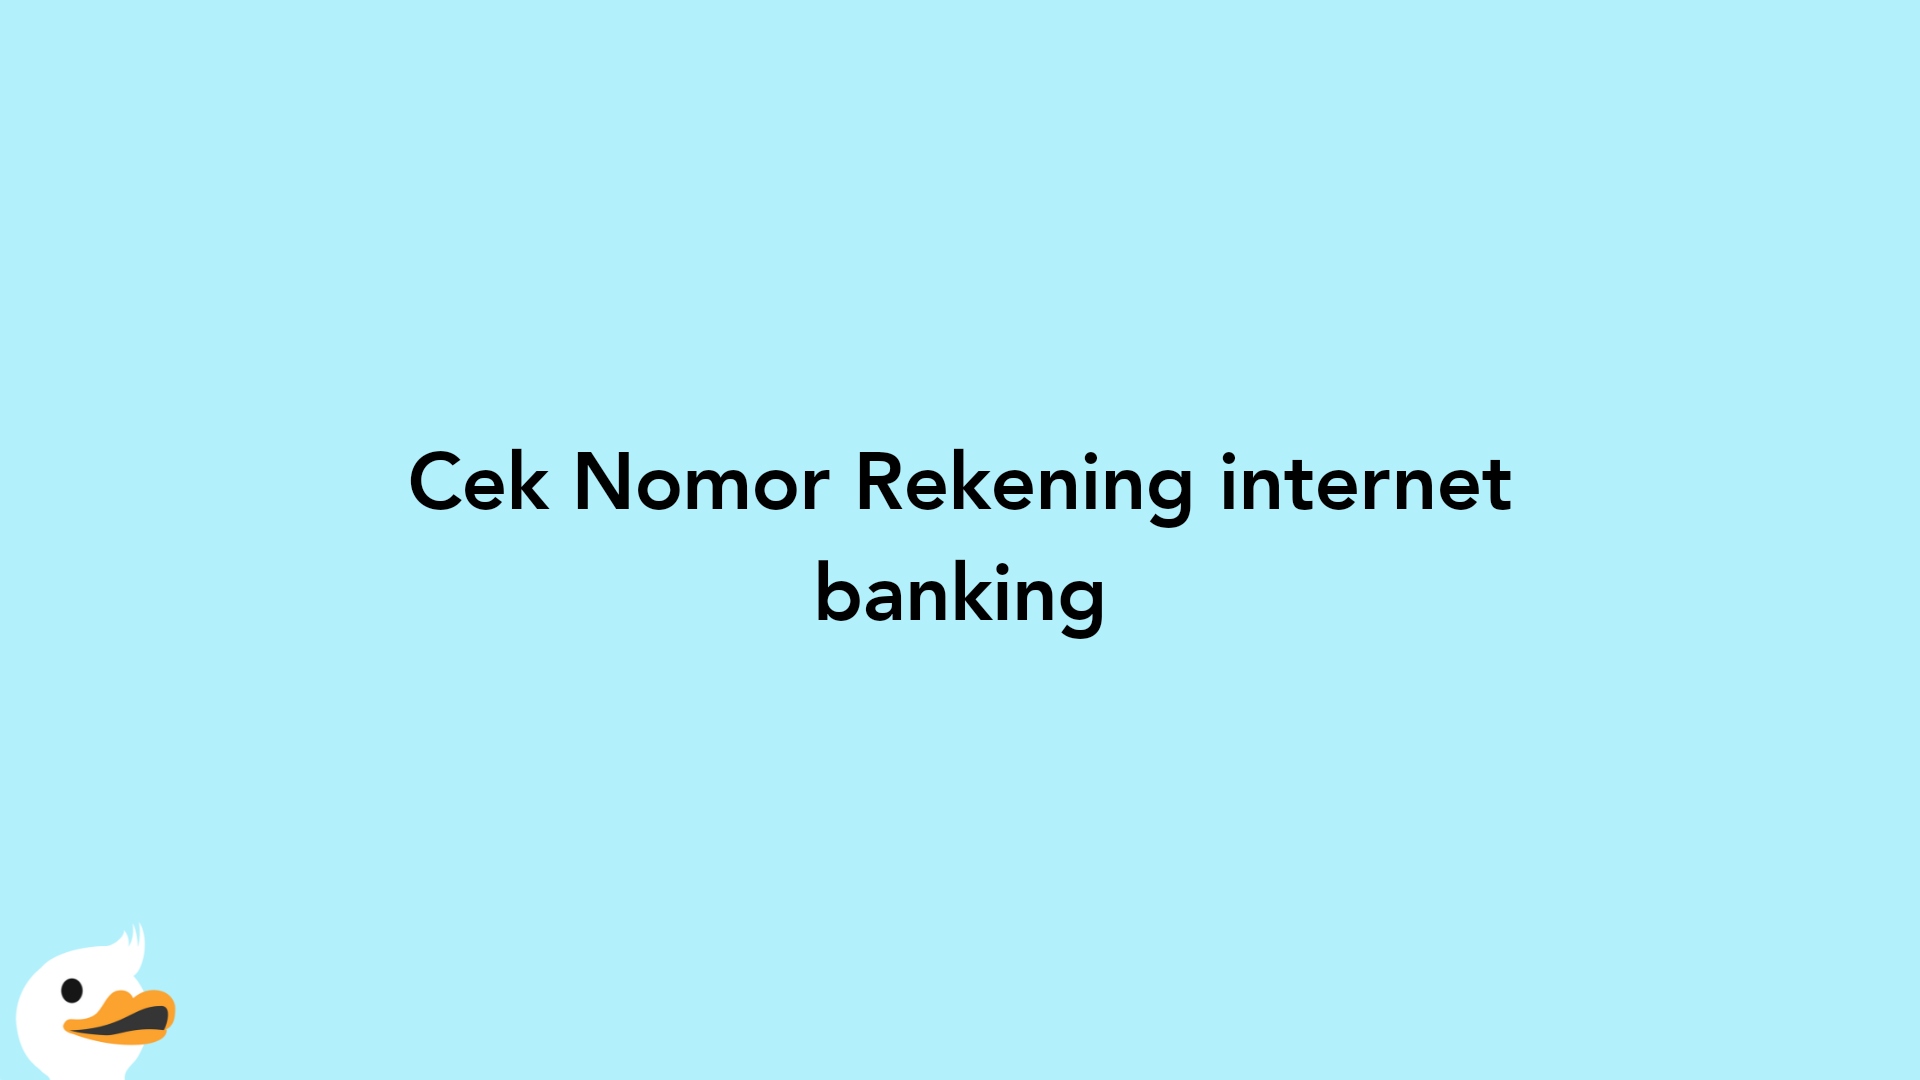 Cek Nomor Rekening internet banking